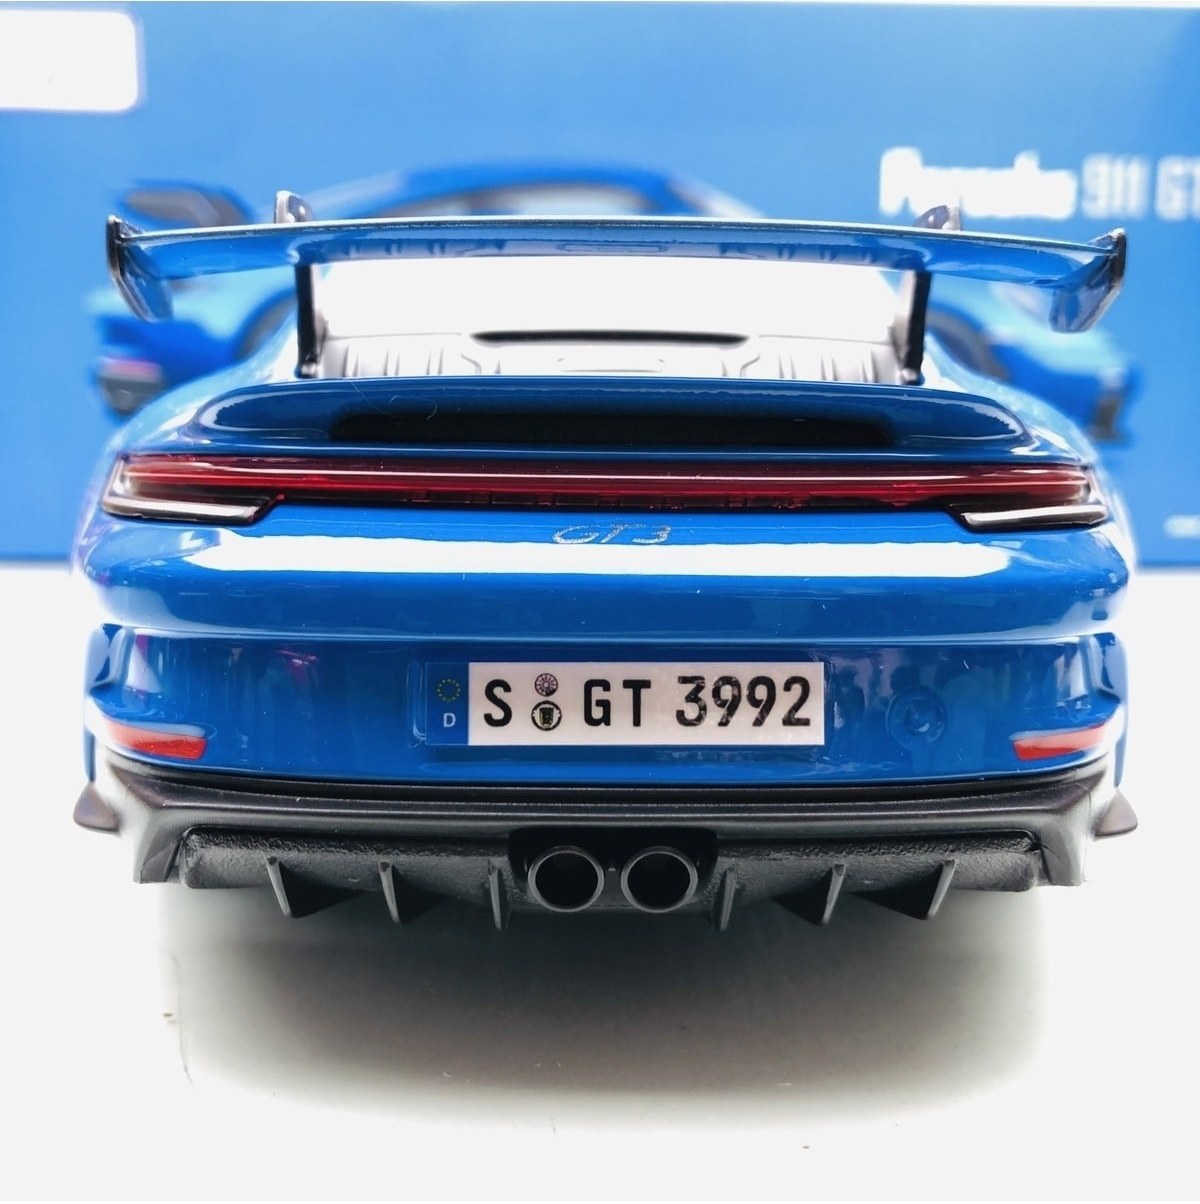 MAISTO - 1/18 - PORSCHE - 911 992 GT3 COUPE 2022 - BLACK WHEELS - BLUE